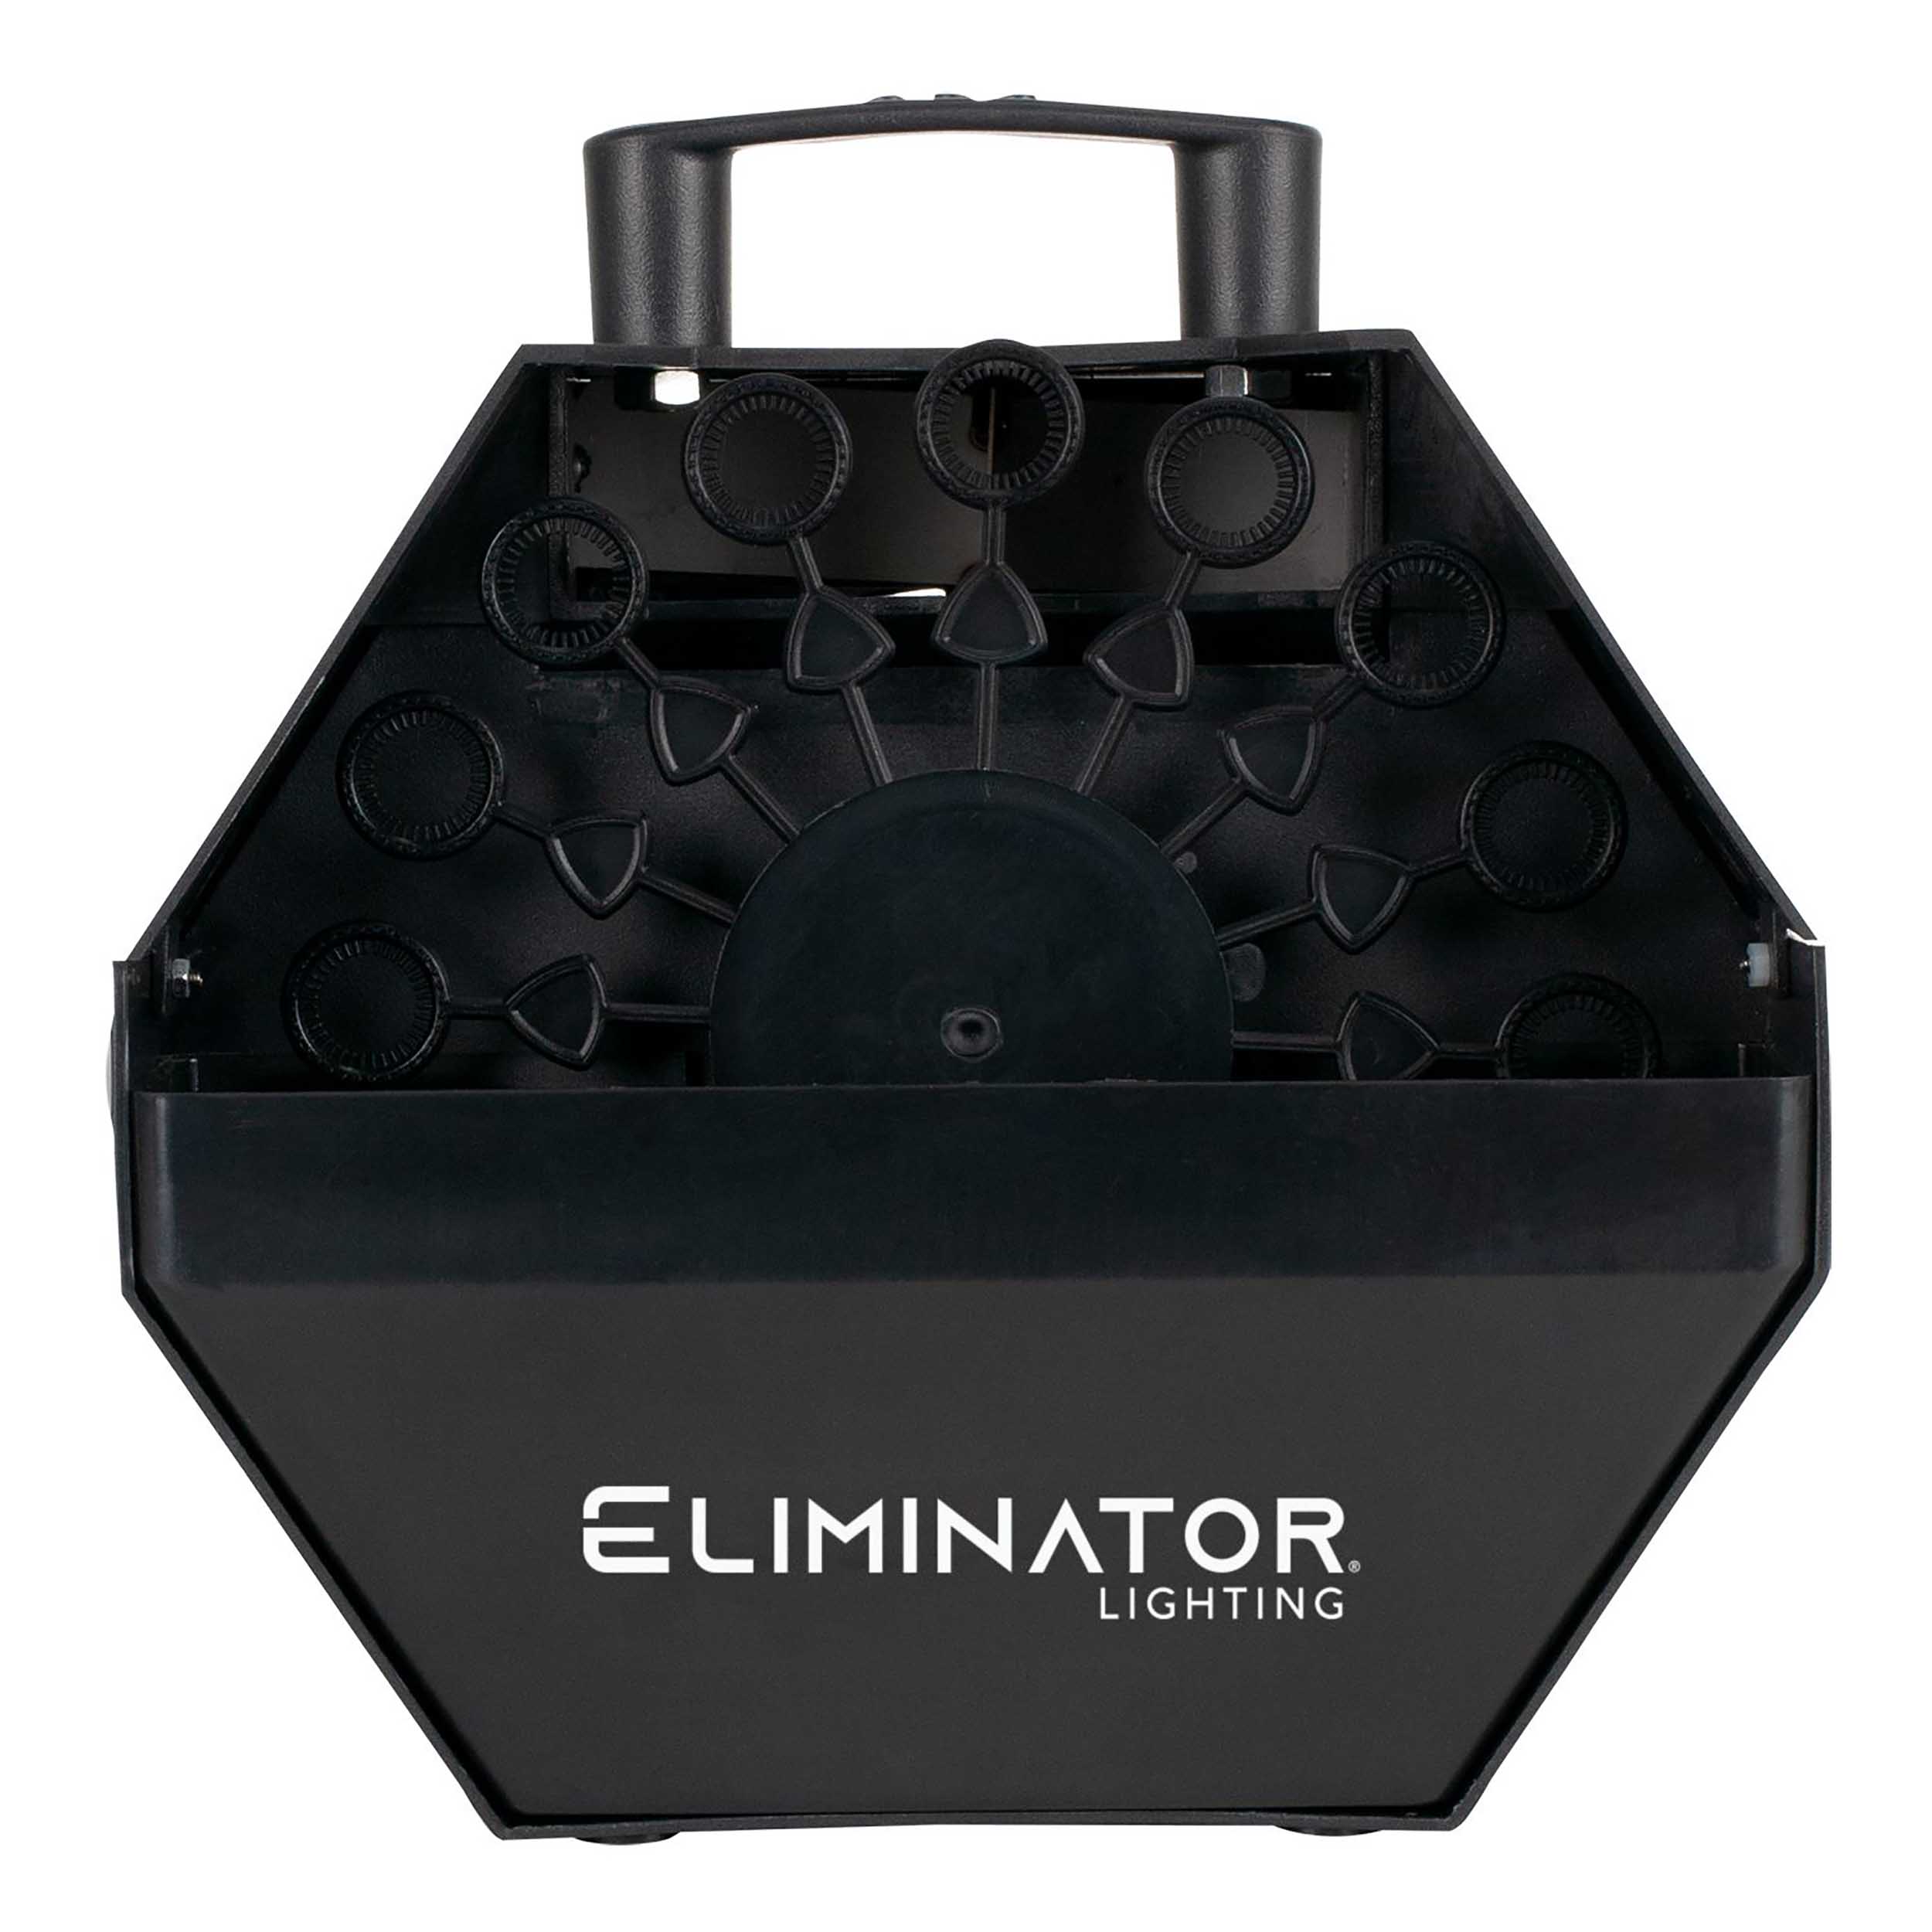 Eliminator Lighting Bubble Storm Bubble Effects Machine - Black by Eliminator Lighting